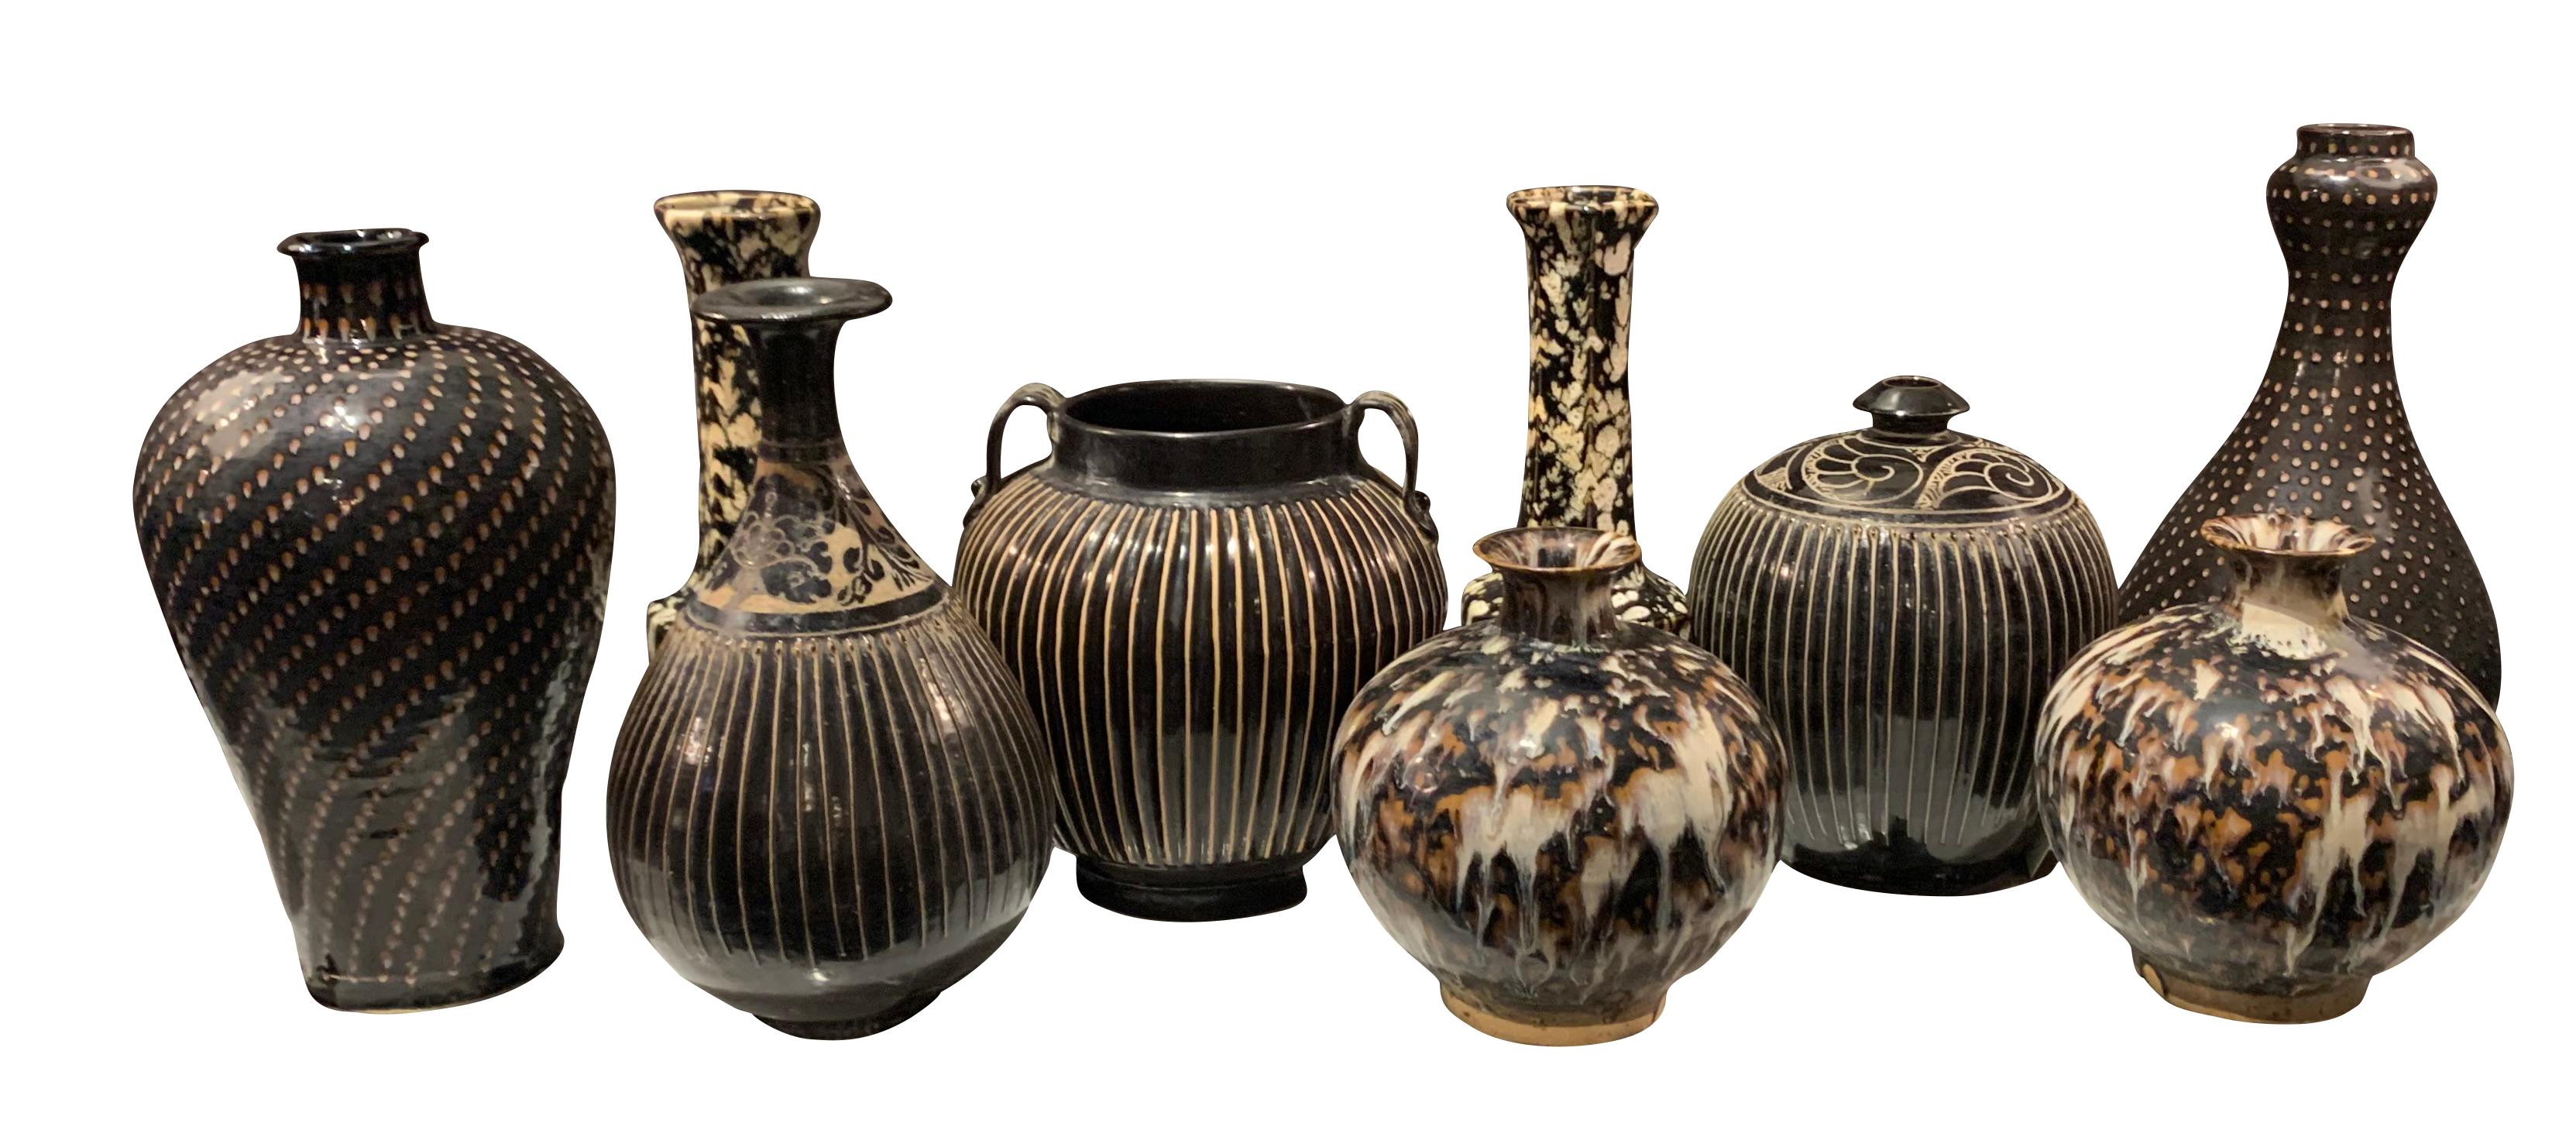 Black and White Splattered Glaze Vase, China, Contemporary 1